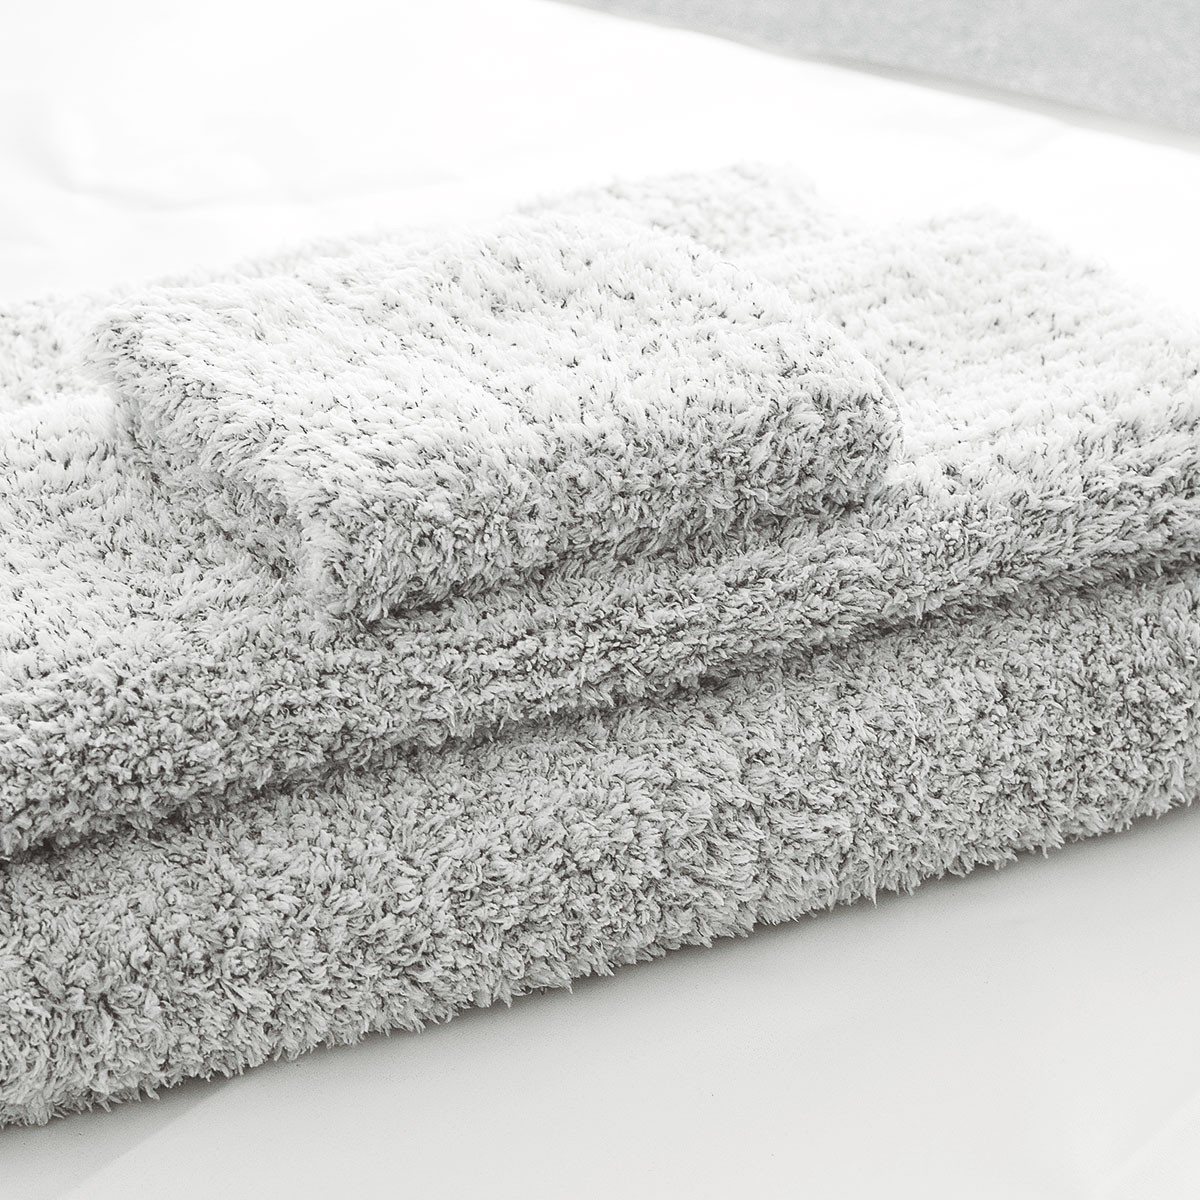 Microbamboo Salon Towels / Bamboo Charcoal Microfiber